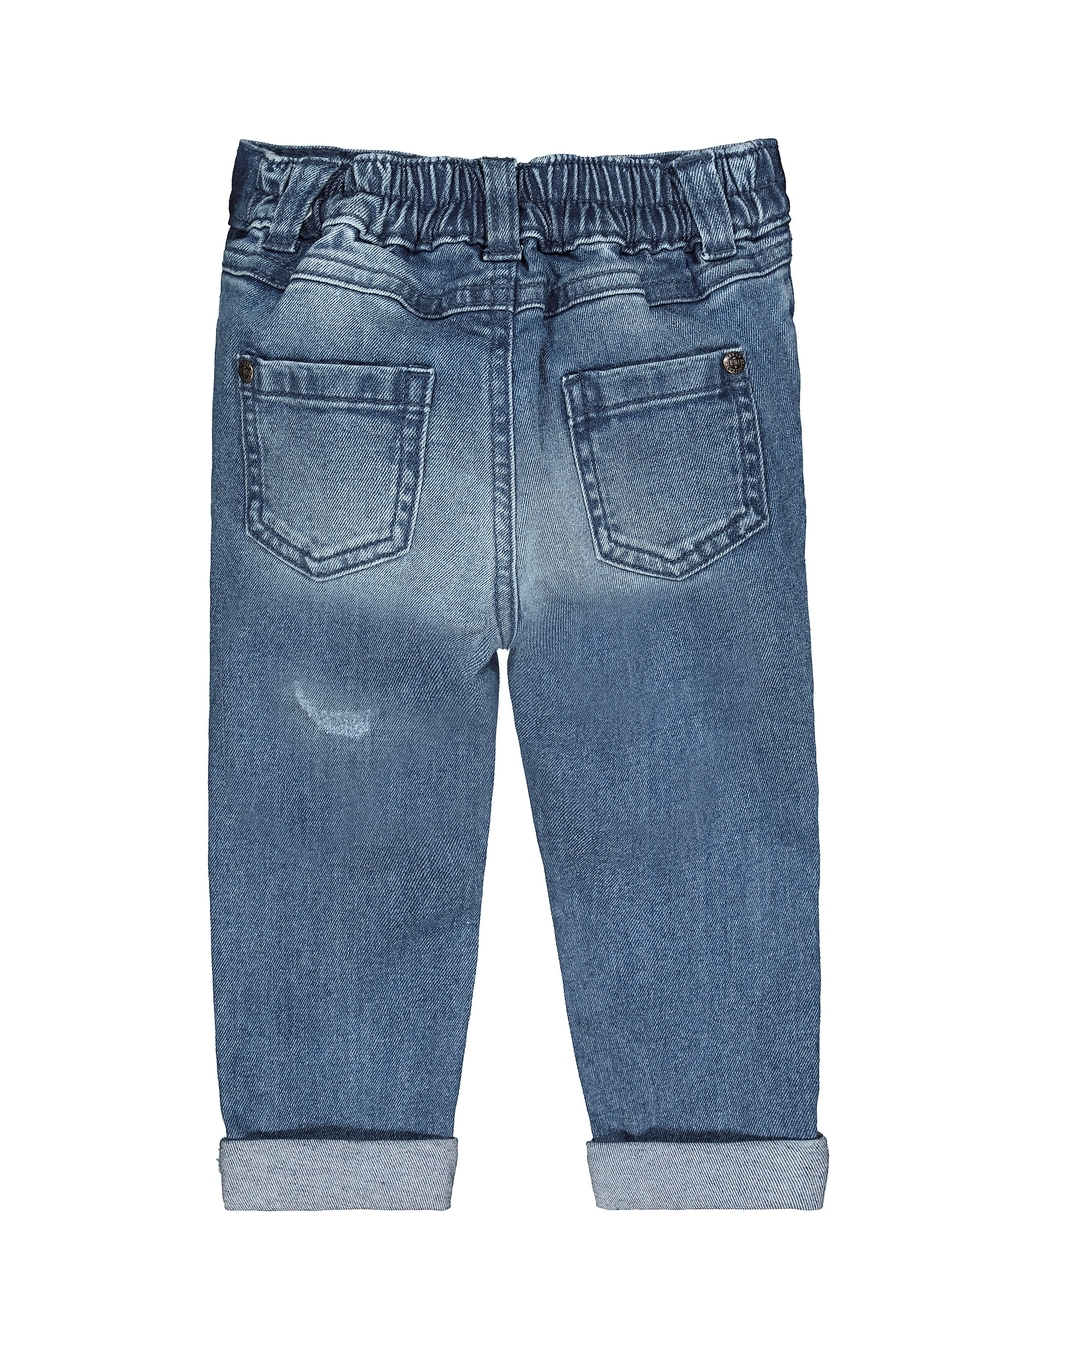 Buy U.S. Polo Assn. Kids Boys Slim Fit Blue Jeans - NNNOW.com